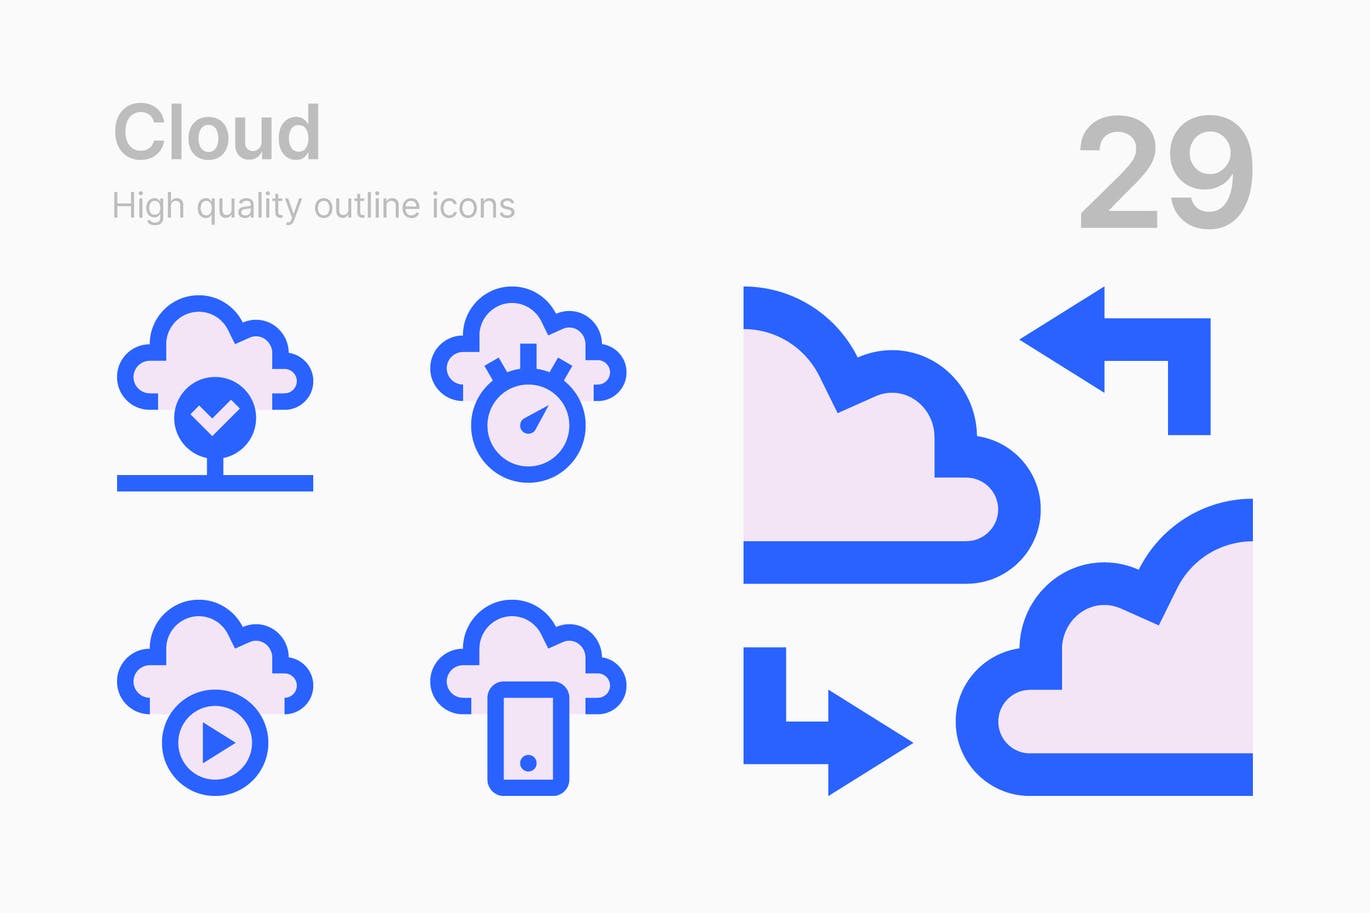 Cloud Technologies Icons